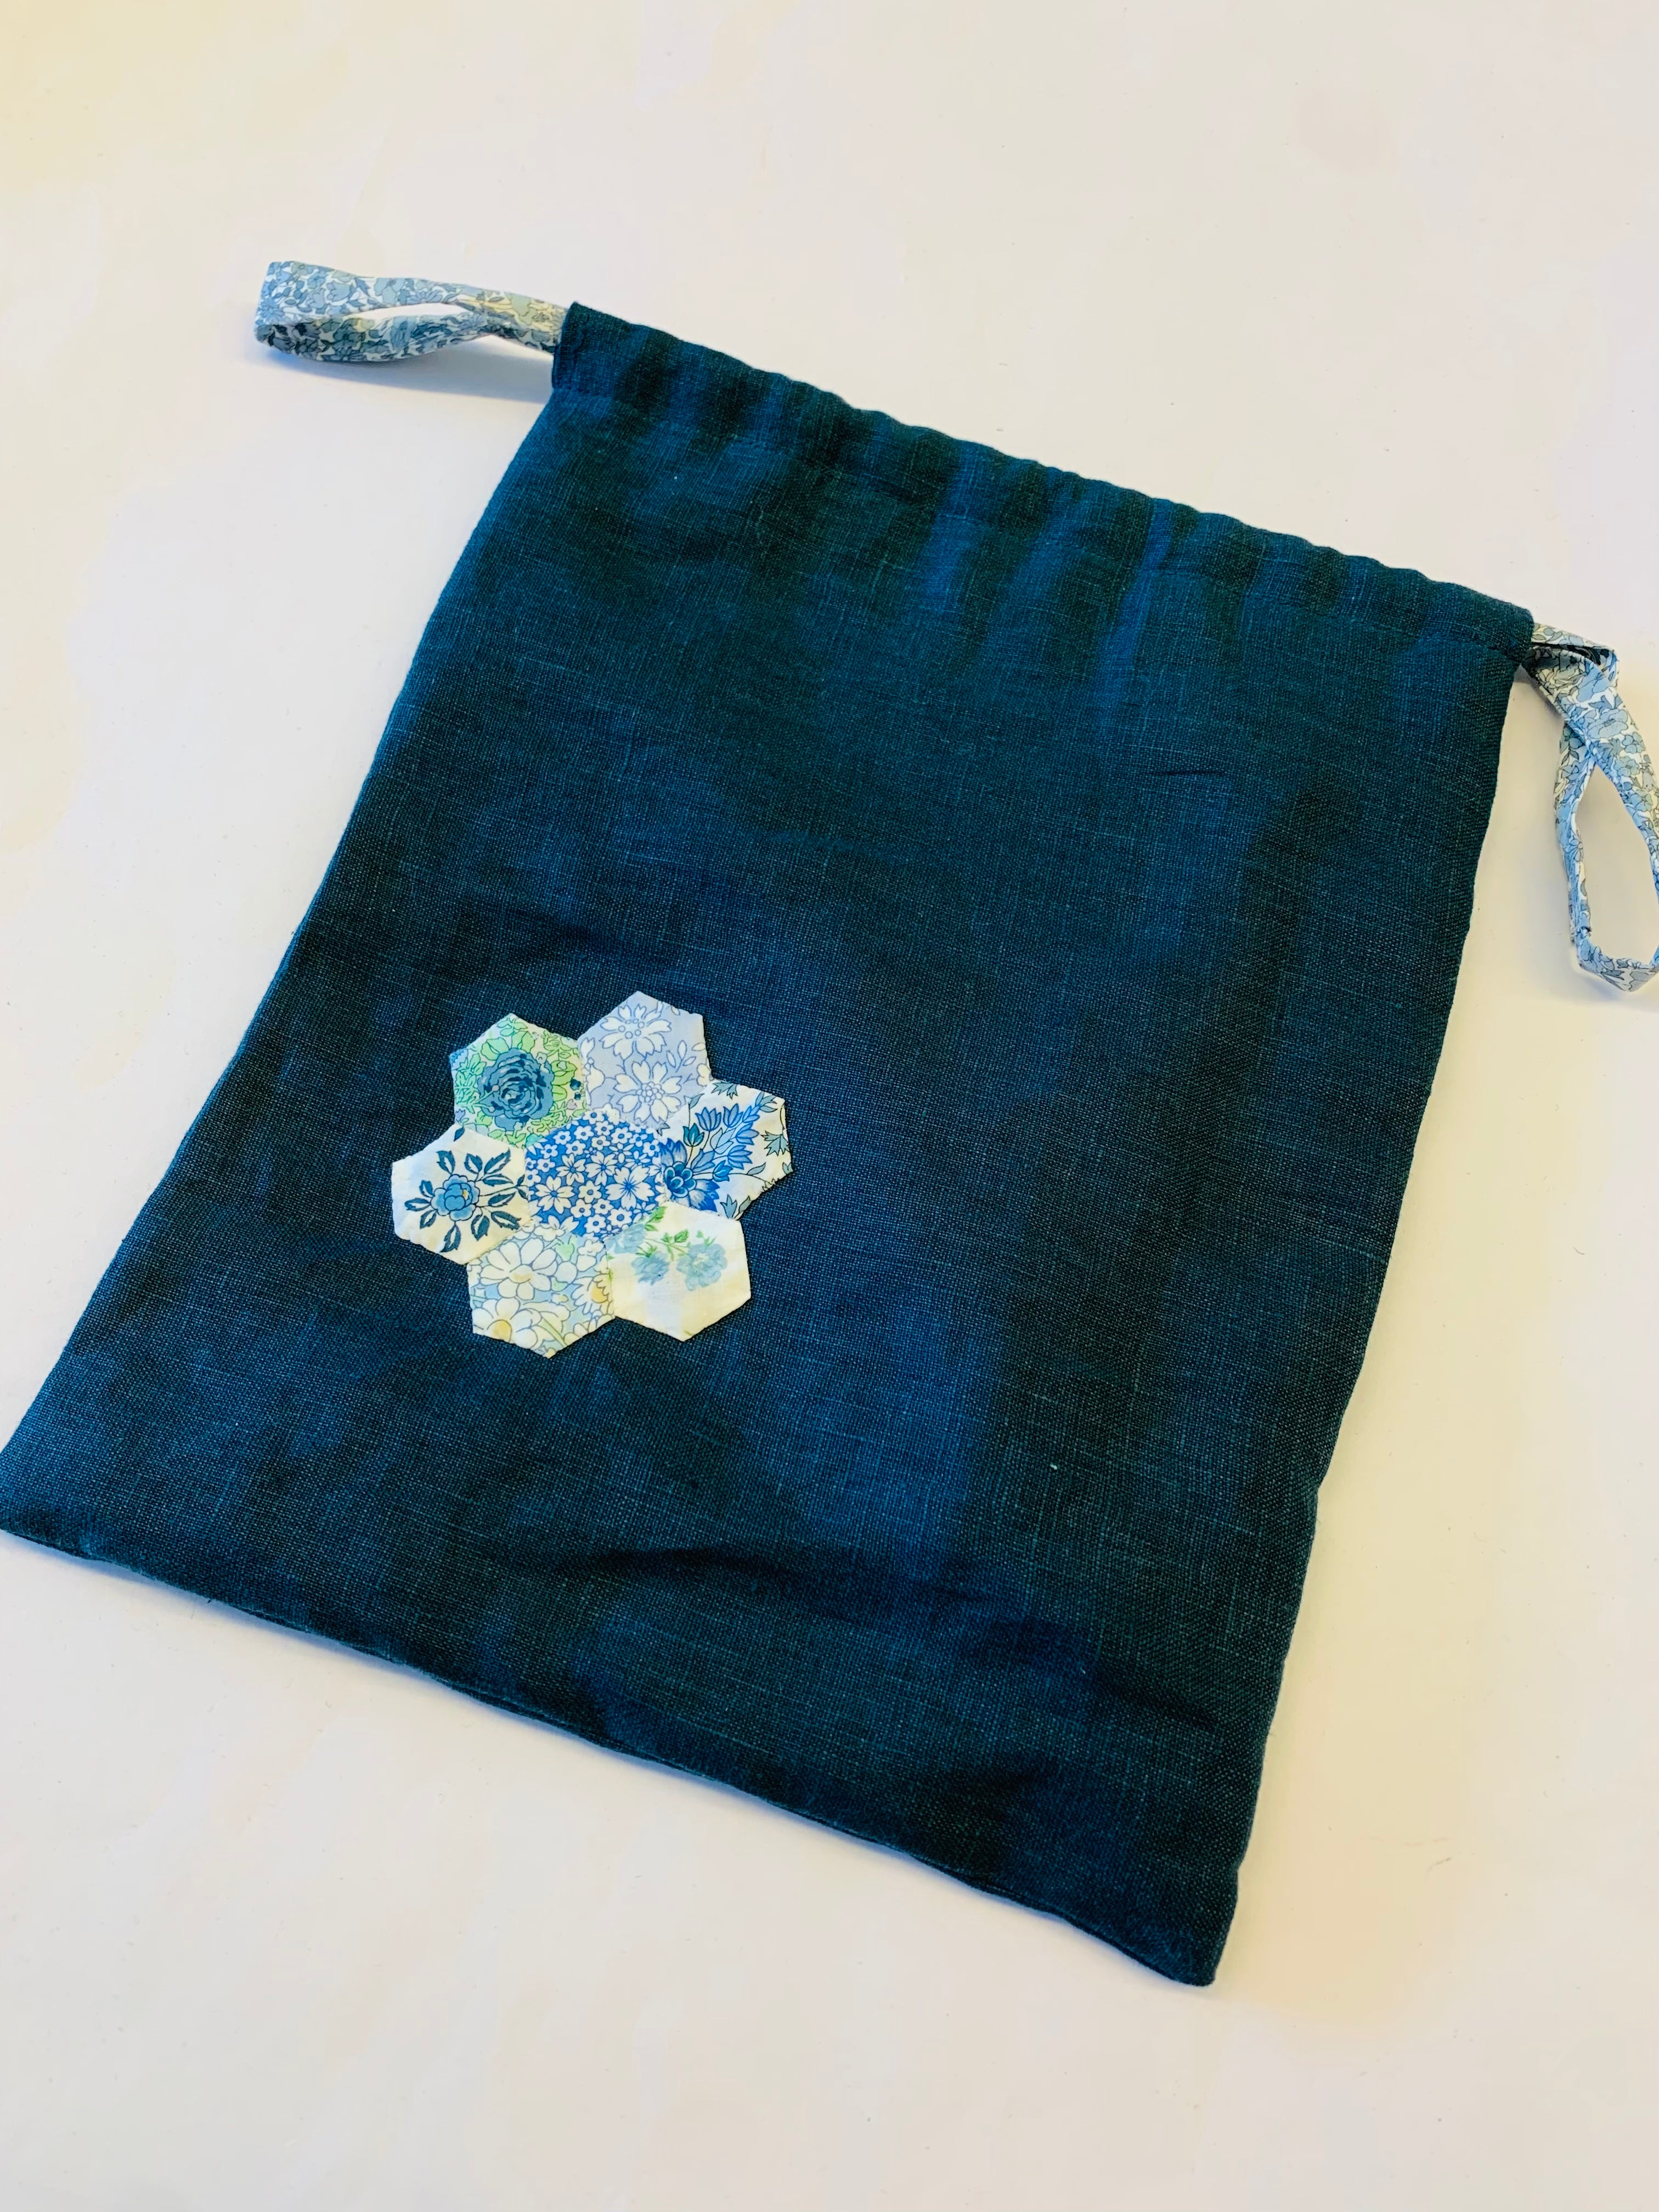 Linen drawstring bag with applique flower